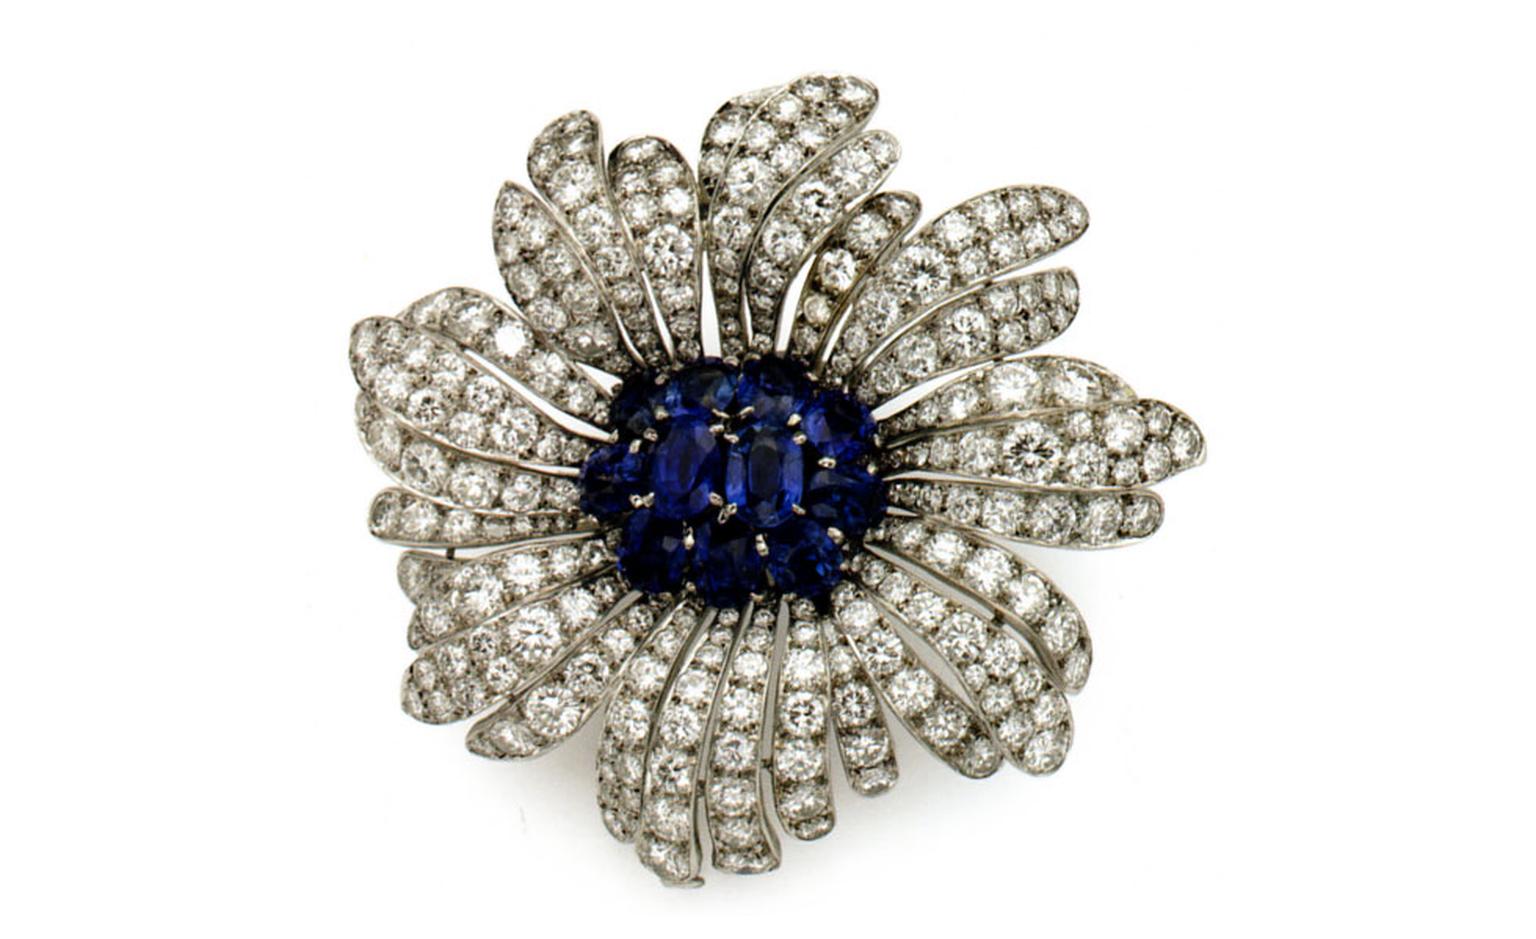 Van Cleef & Arpels diamond and sapphire brooch belonging to Princess Grace.